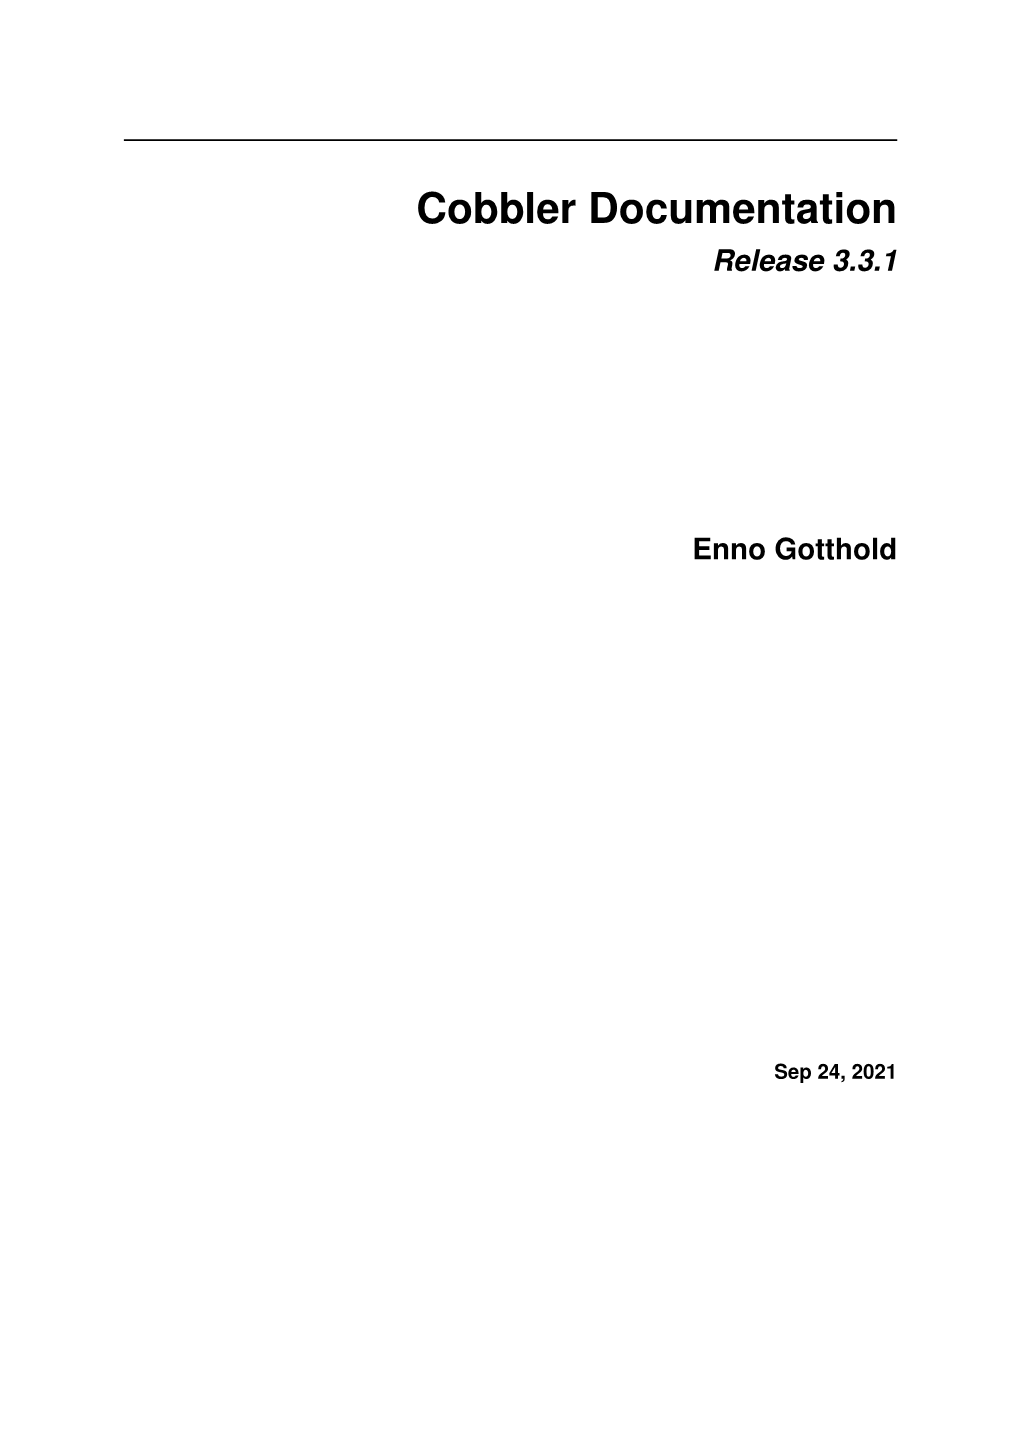 Cobbler Documentation Release 3.3.1